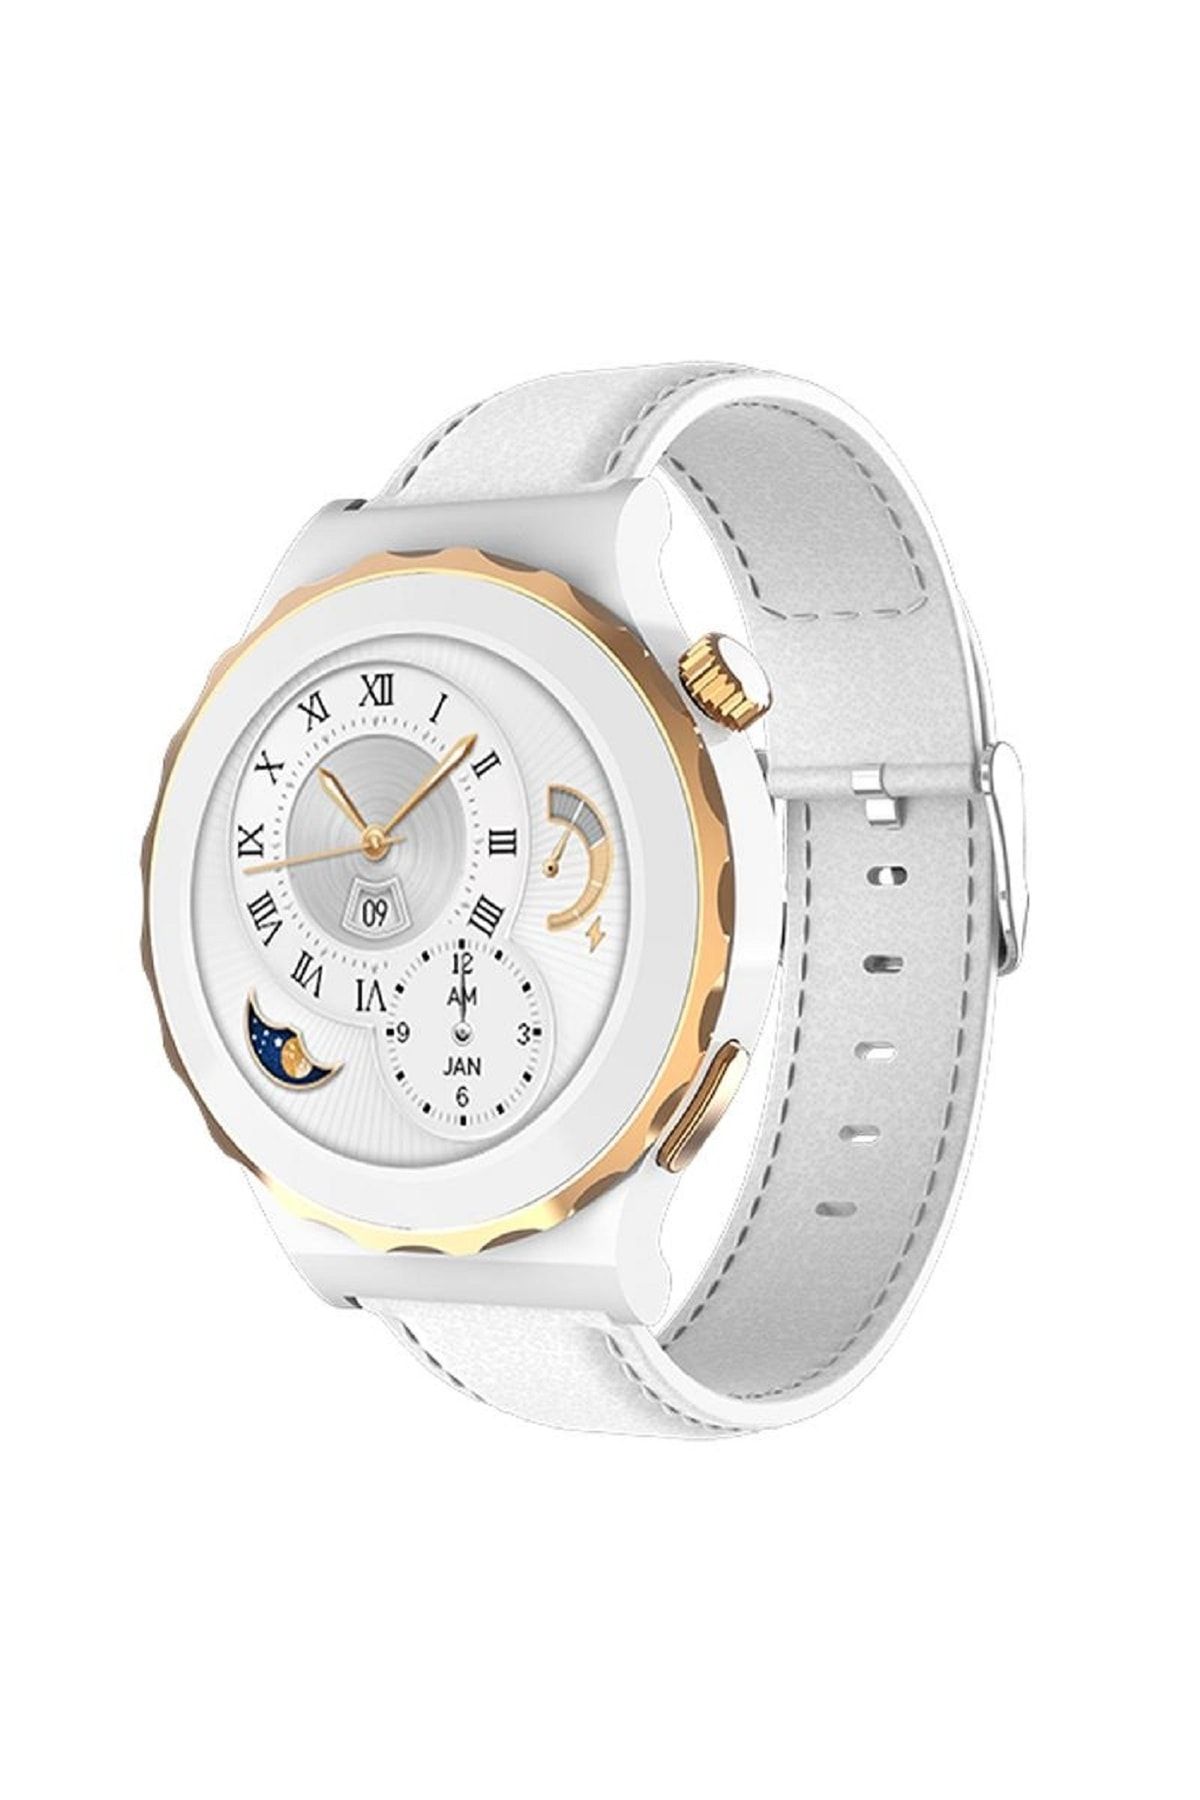 JetTeknolojim Gt3 Smart Watch Nfc Özellikli Kadın Akıllı Saati Gt3 Smart Watch